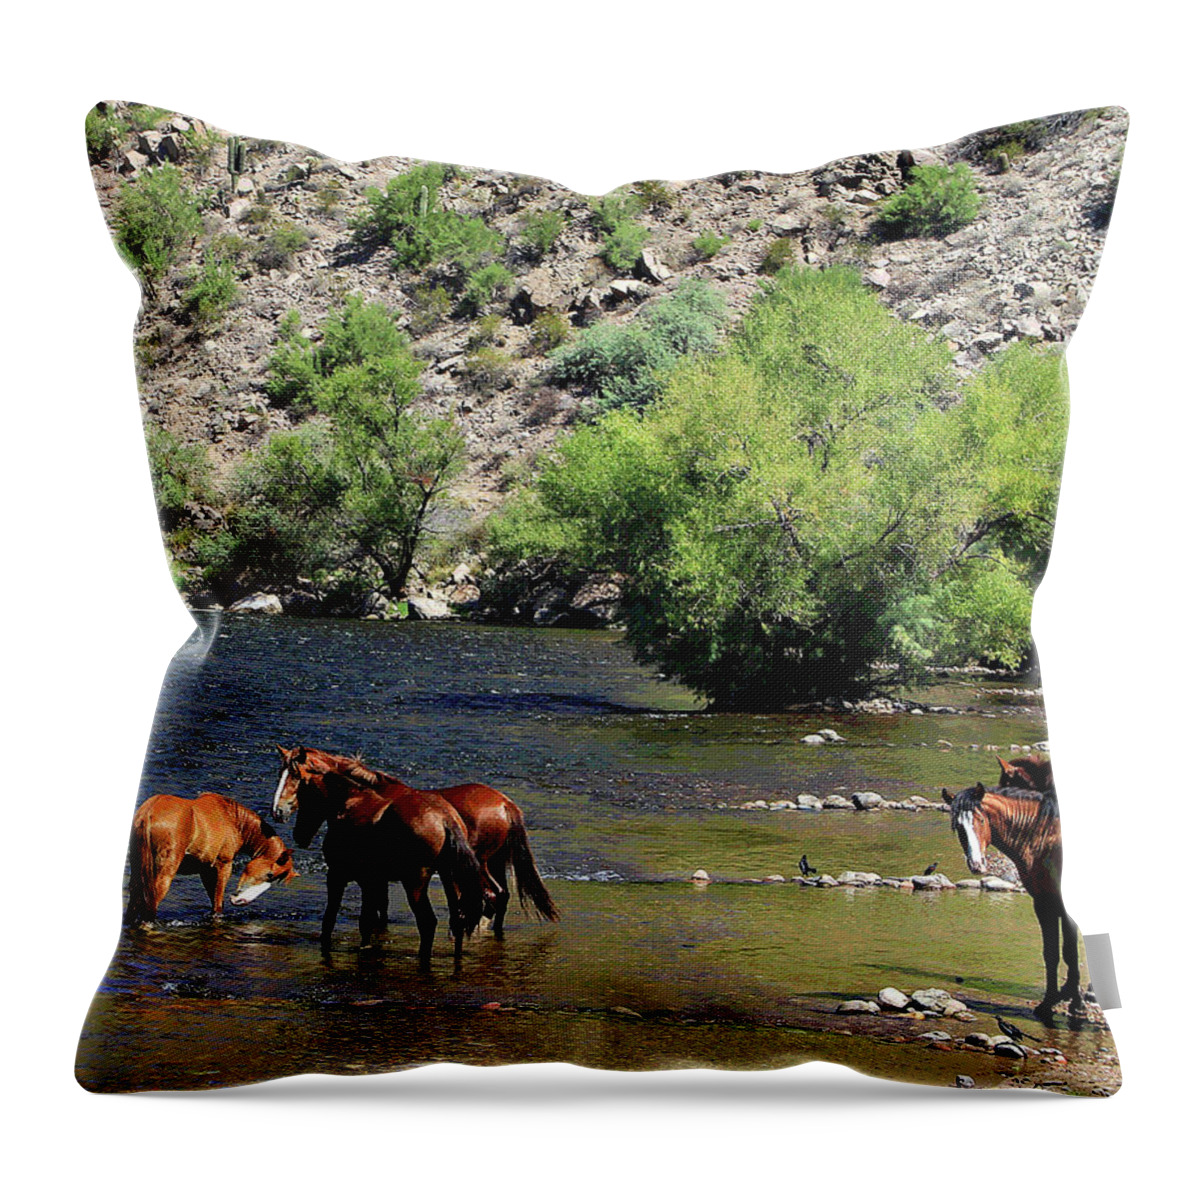 Horses Throw Pillow featuring the photograph Arizona Wild Horses #3 by Matalyn Gardner